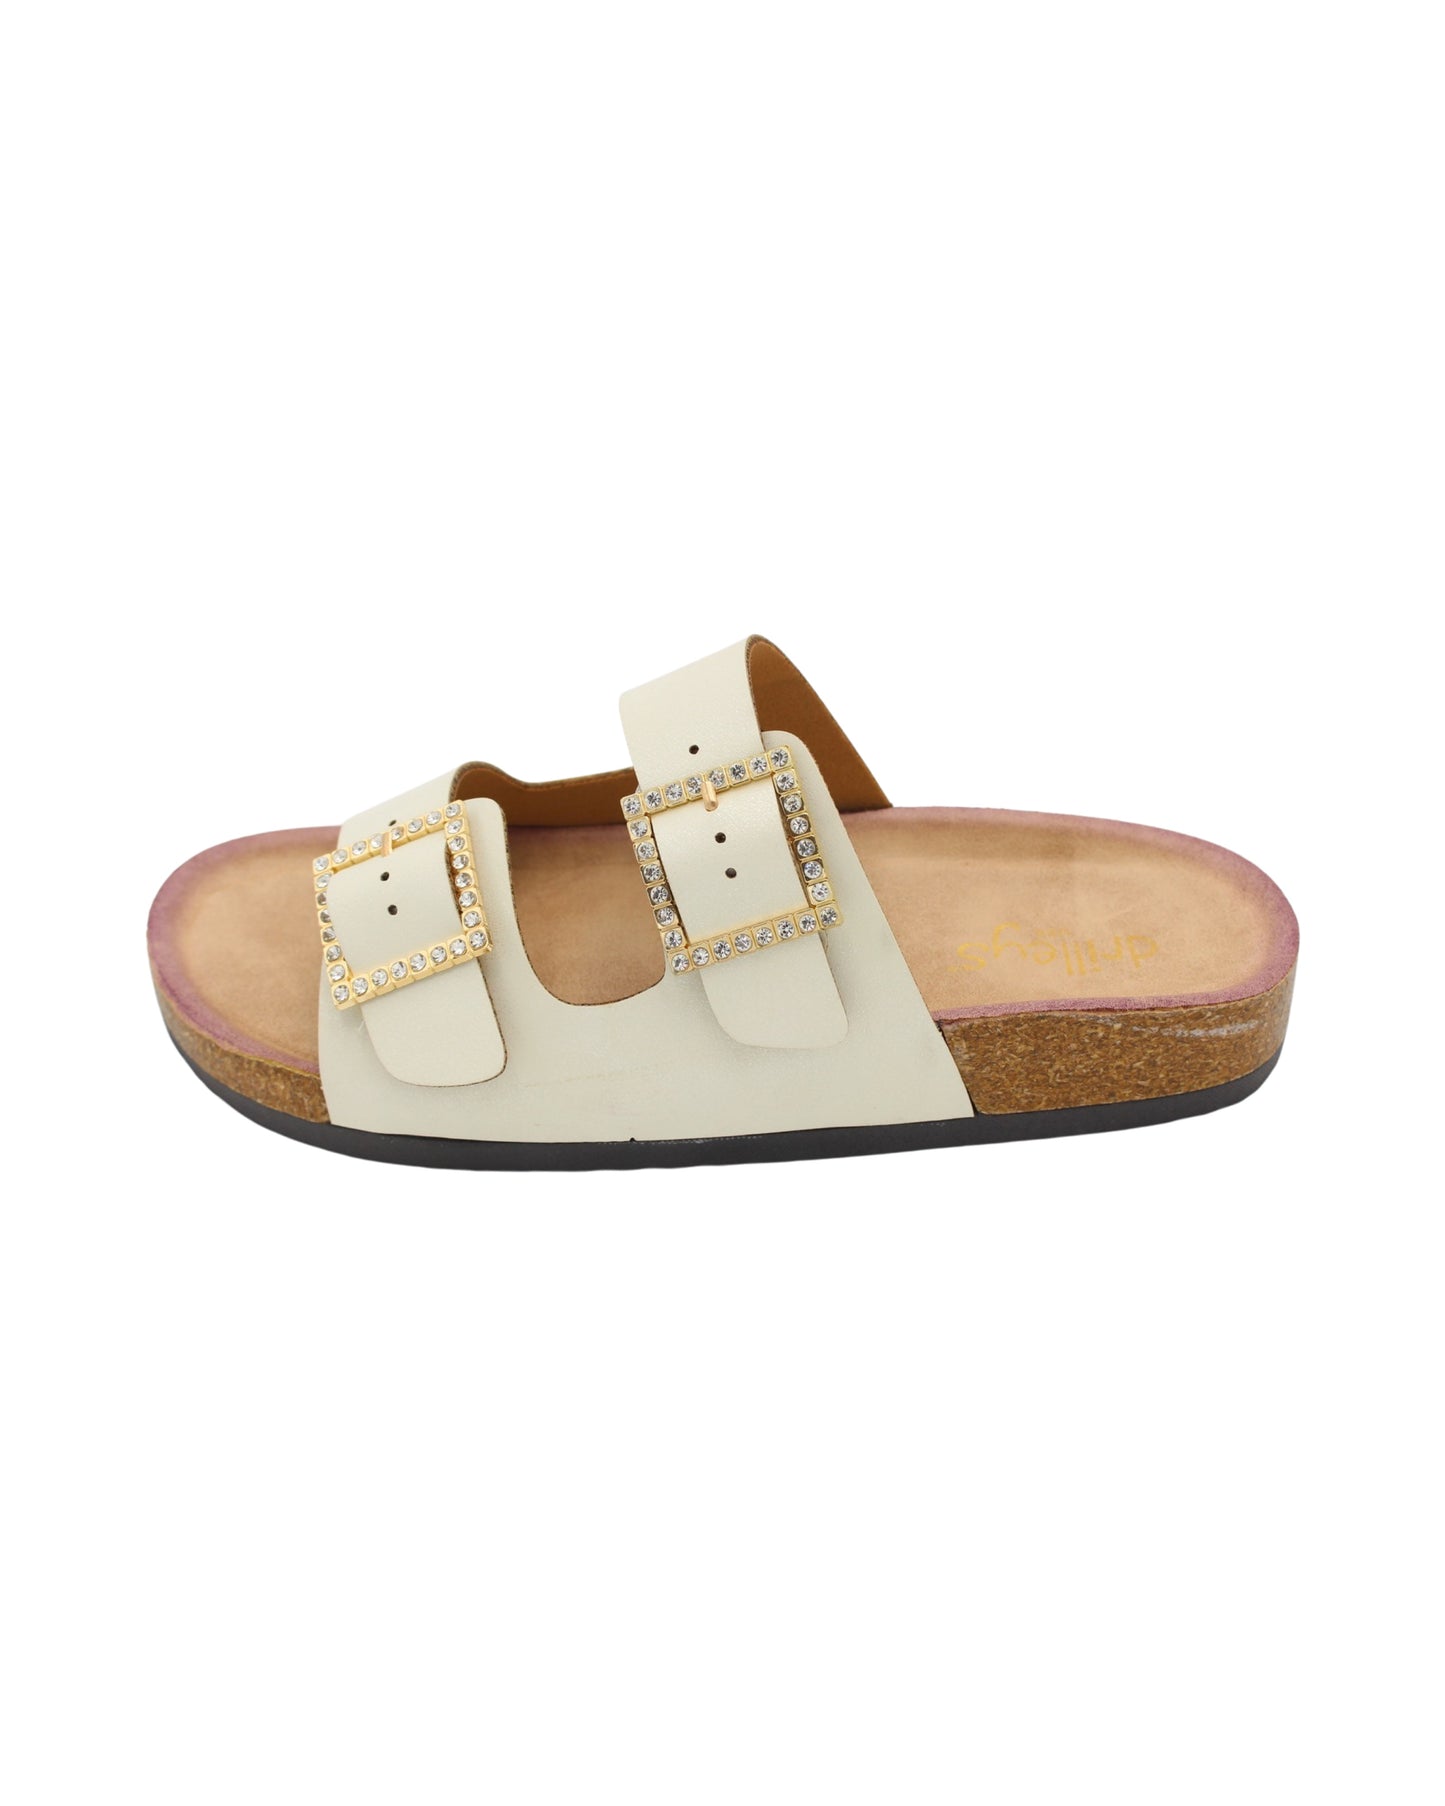 Drilleys - Ladies Shoes Sandals Cream (2397)